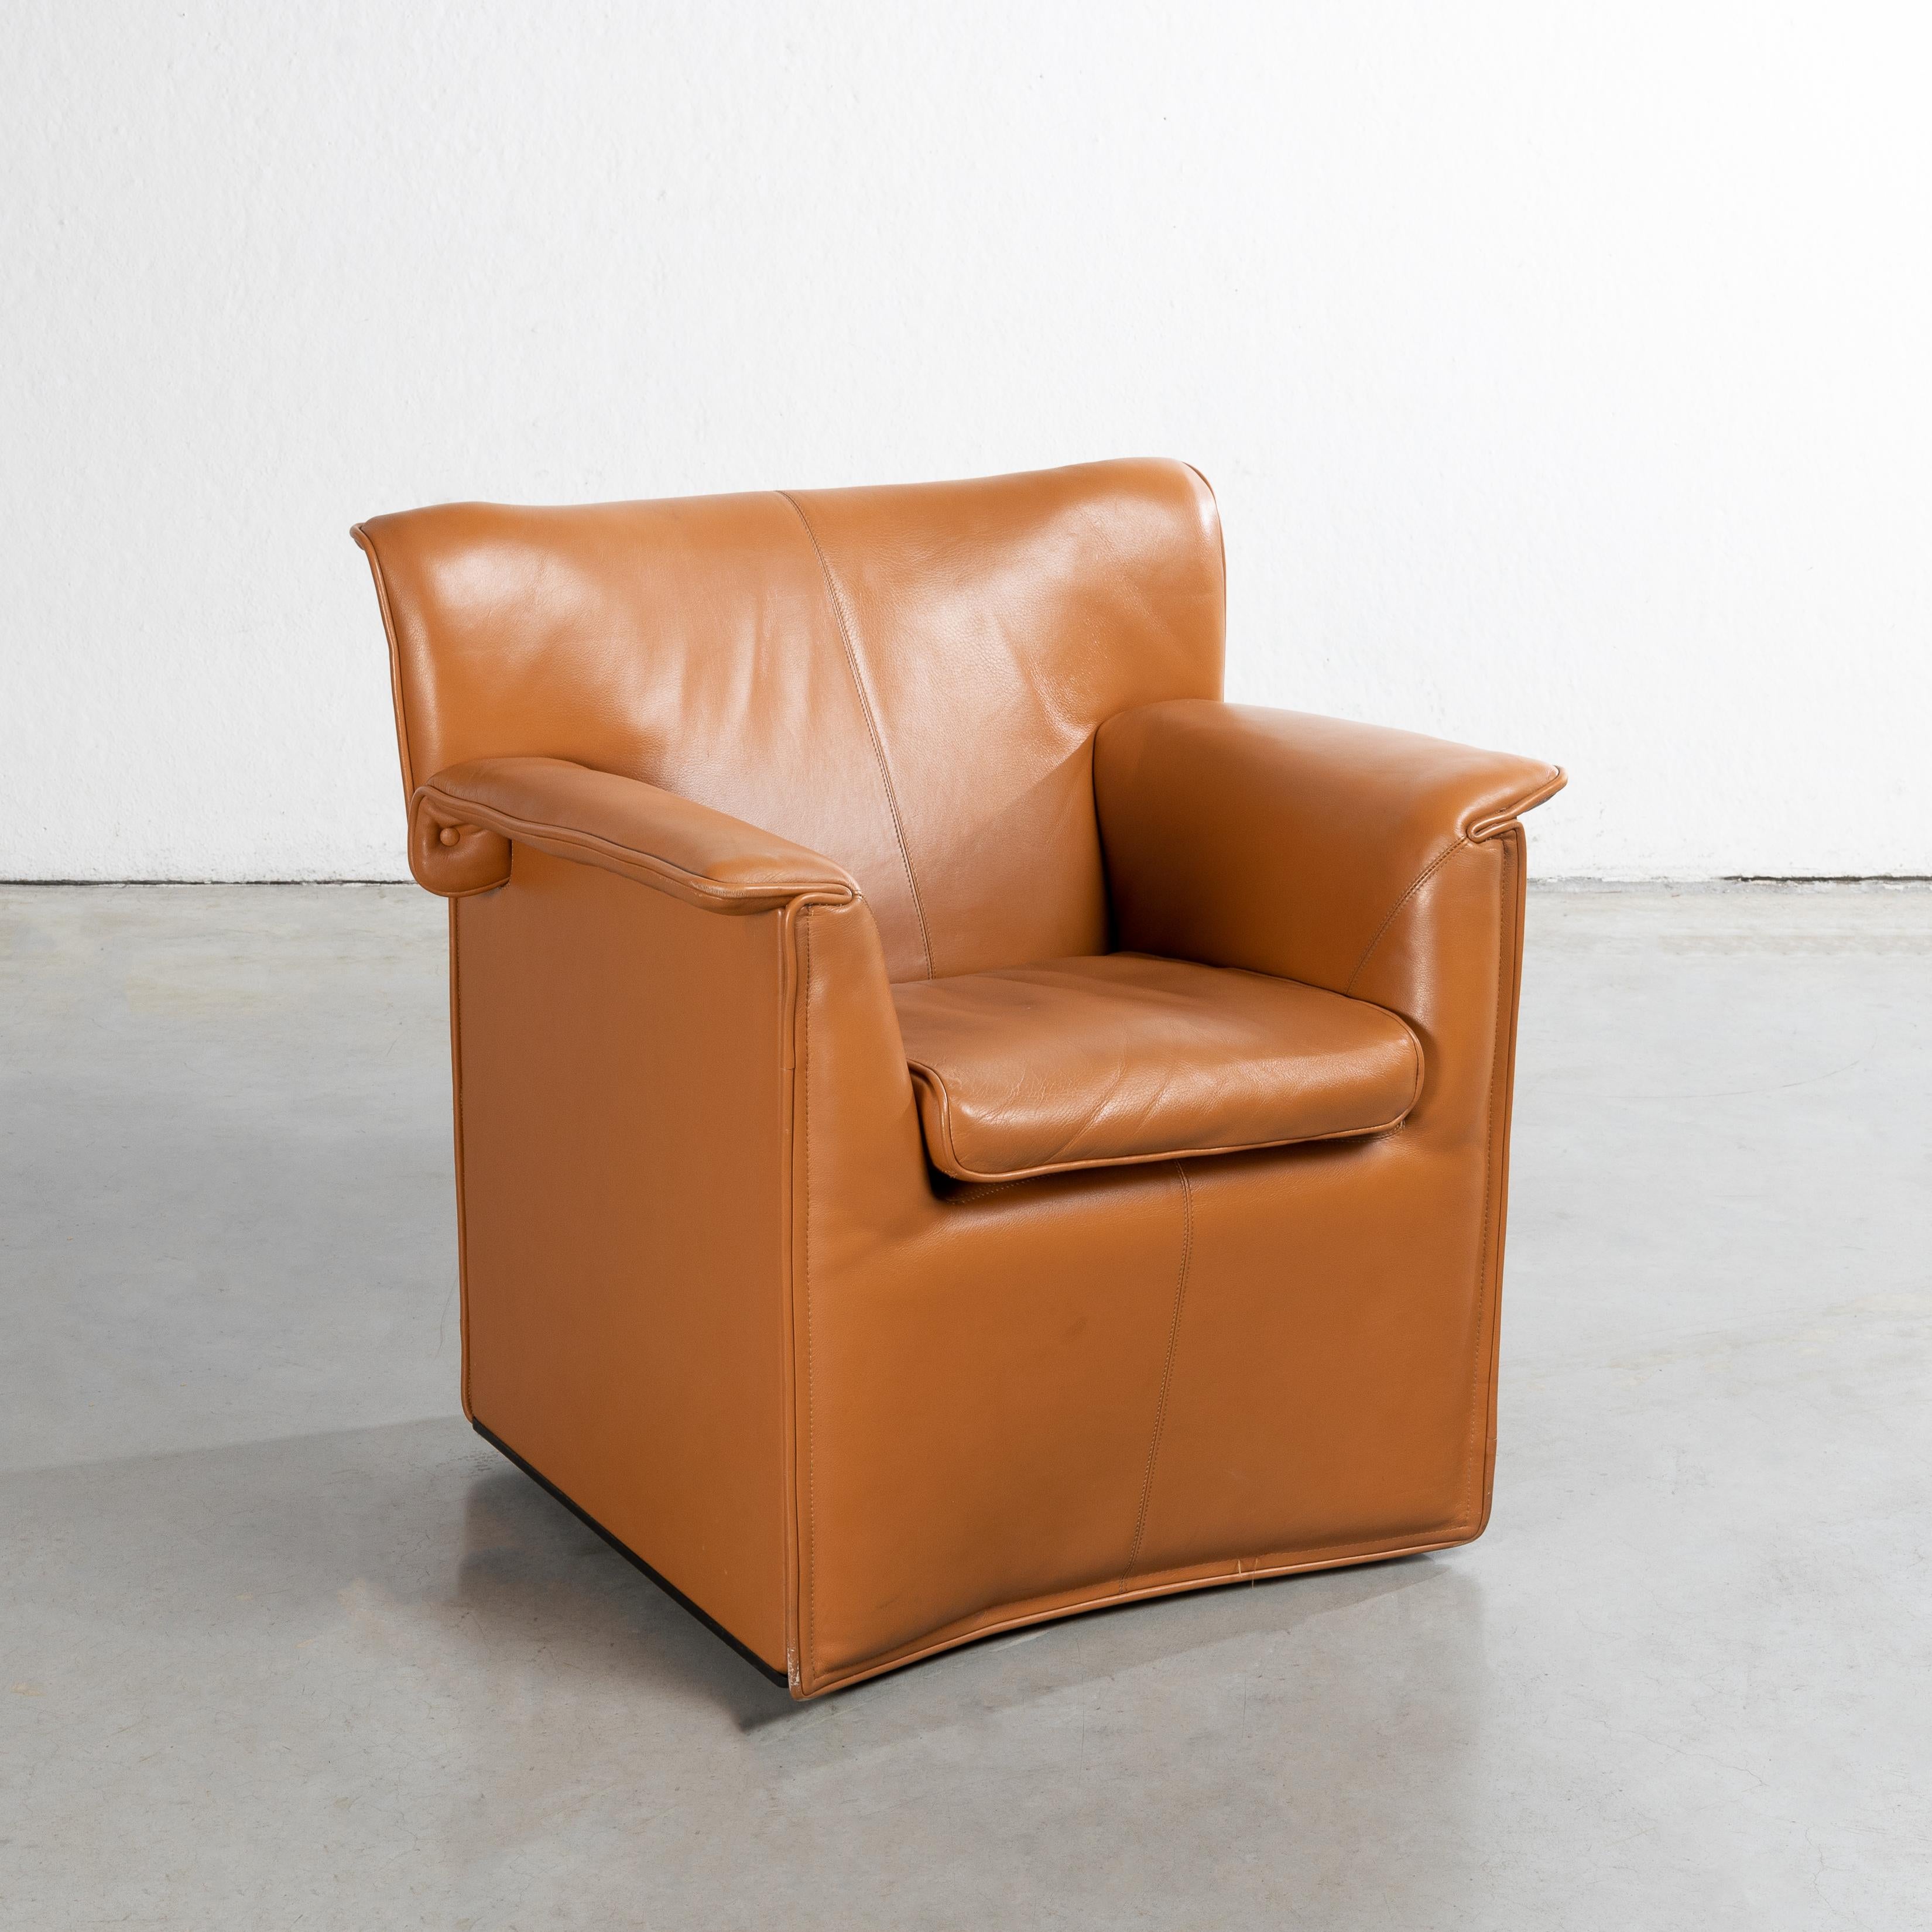 Artona by Afra & Tobia Scarpa – Walnut veneer laminate desk and chair For Sale 8